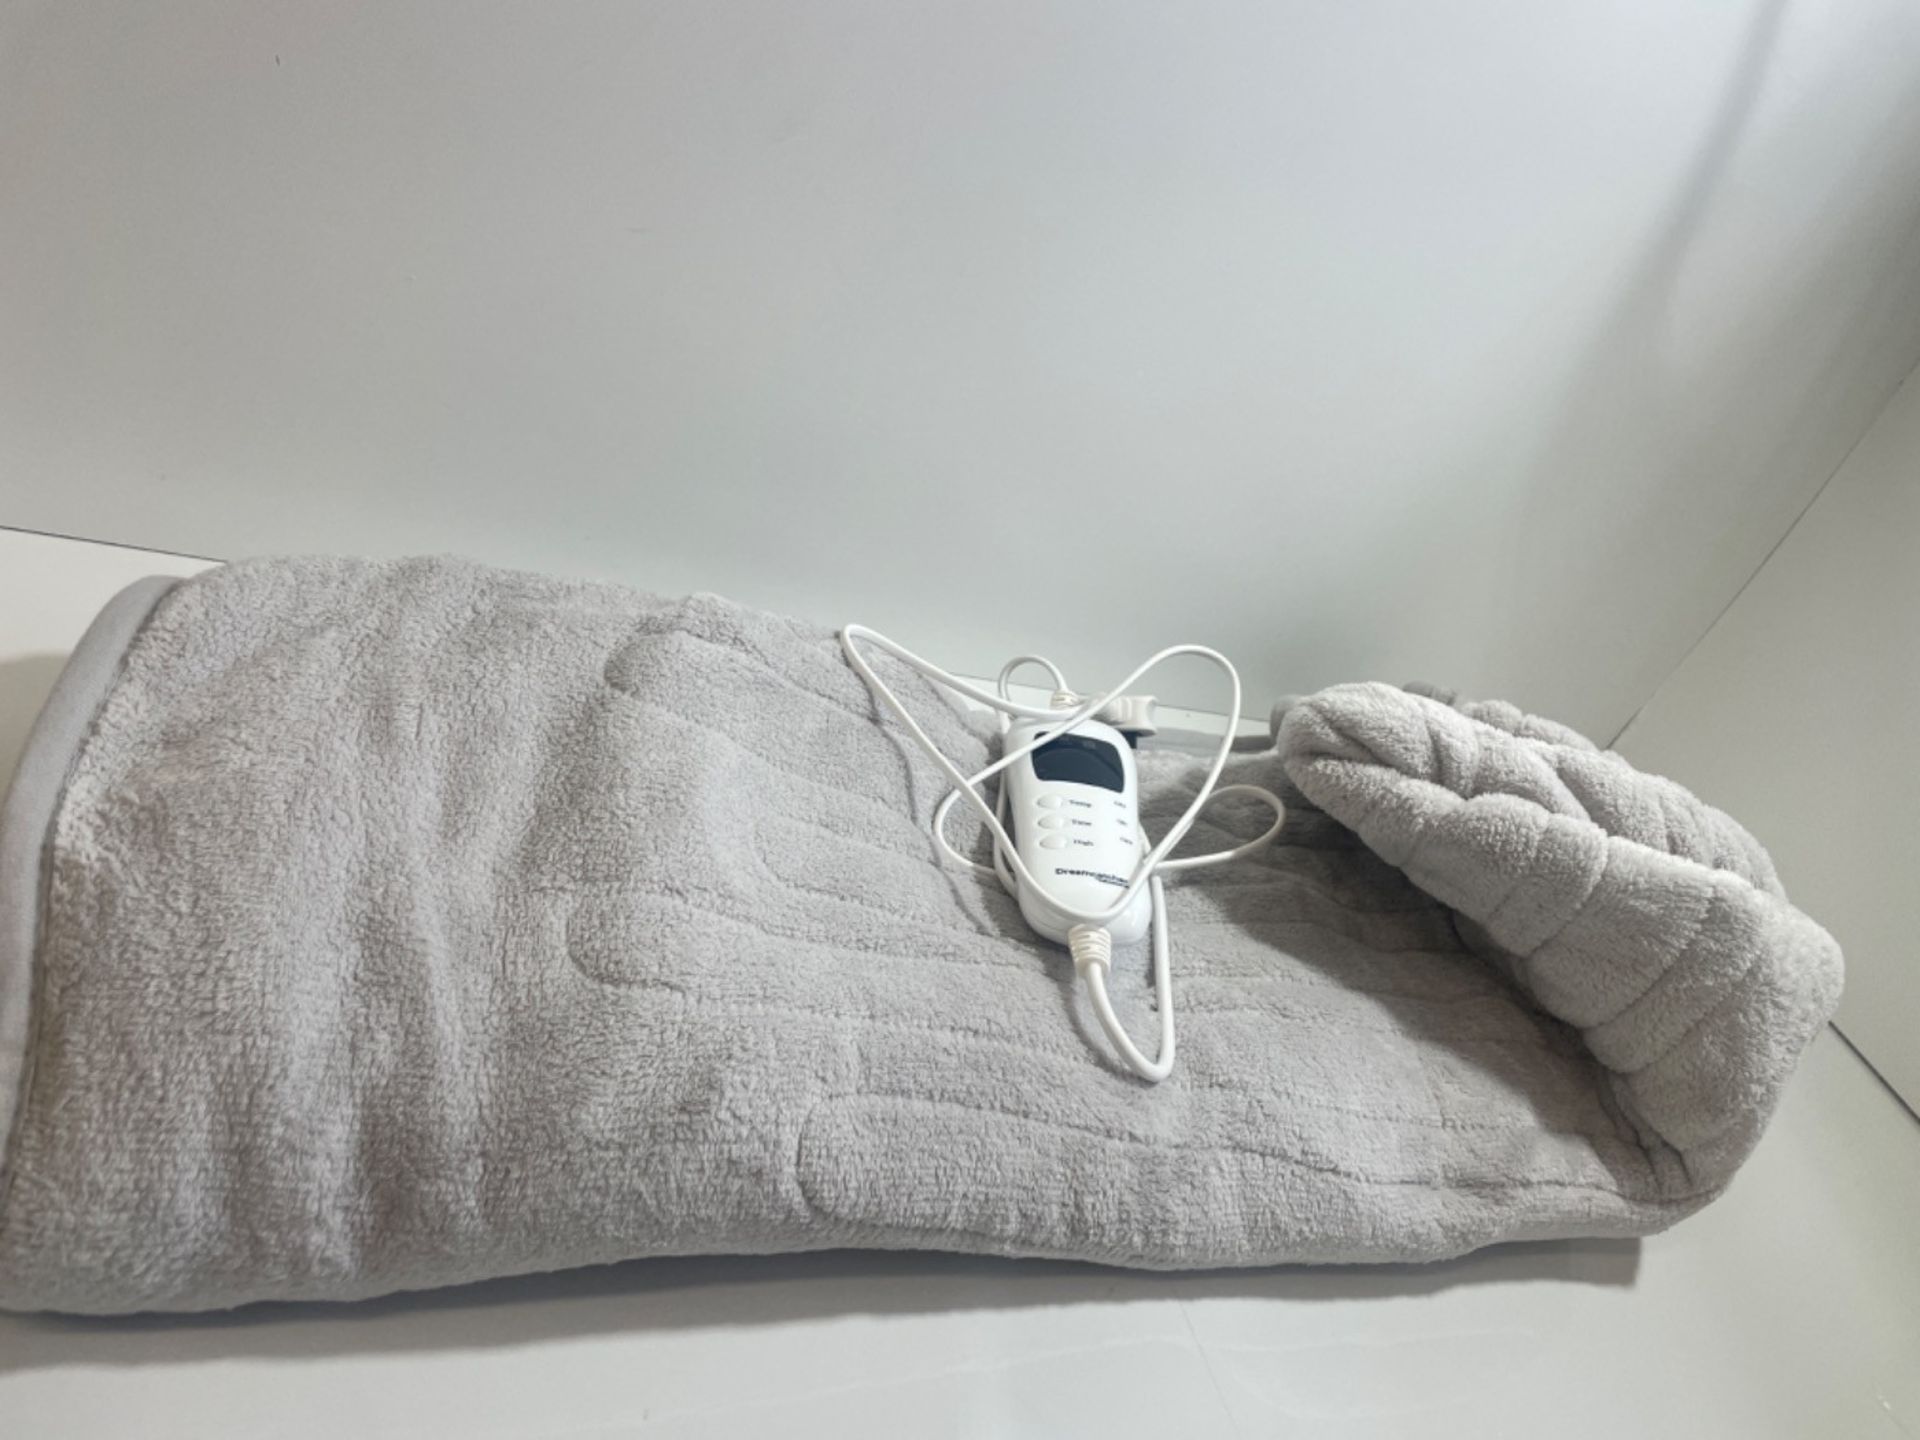 Dreamcatcher Electric Heated Throw Blanket 160 x 120cm, Machine Washable Soft Fleece Overblanket... - Image 2 of 2